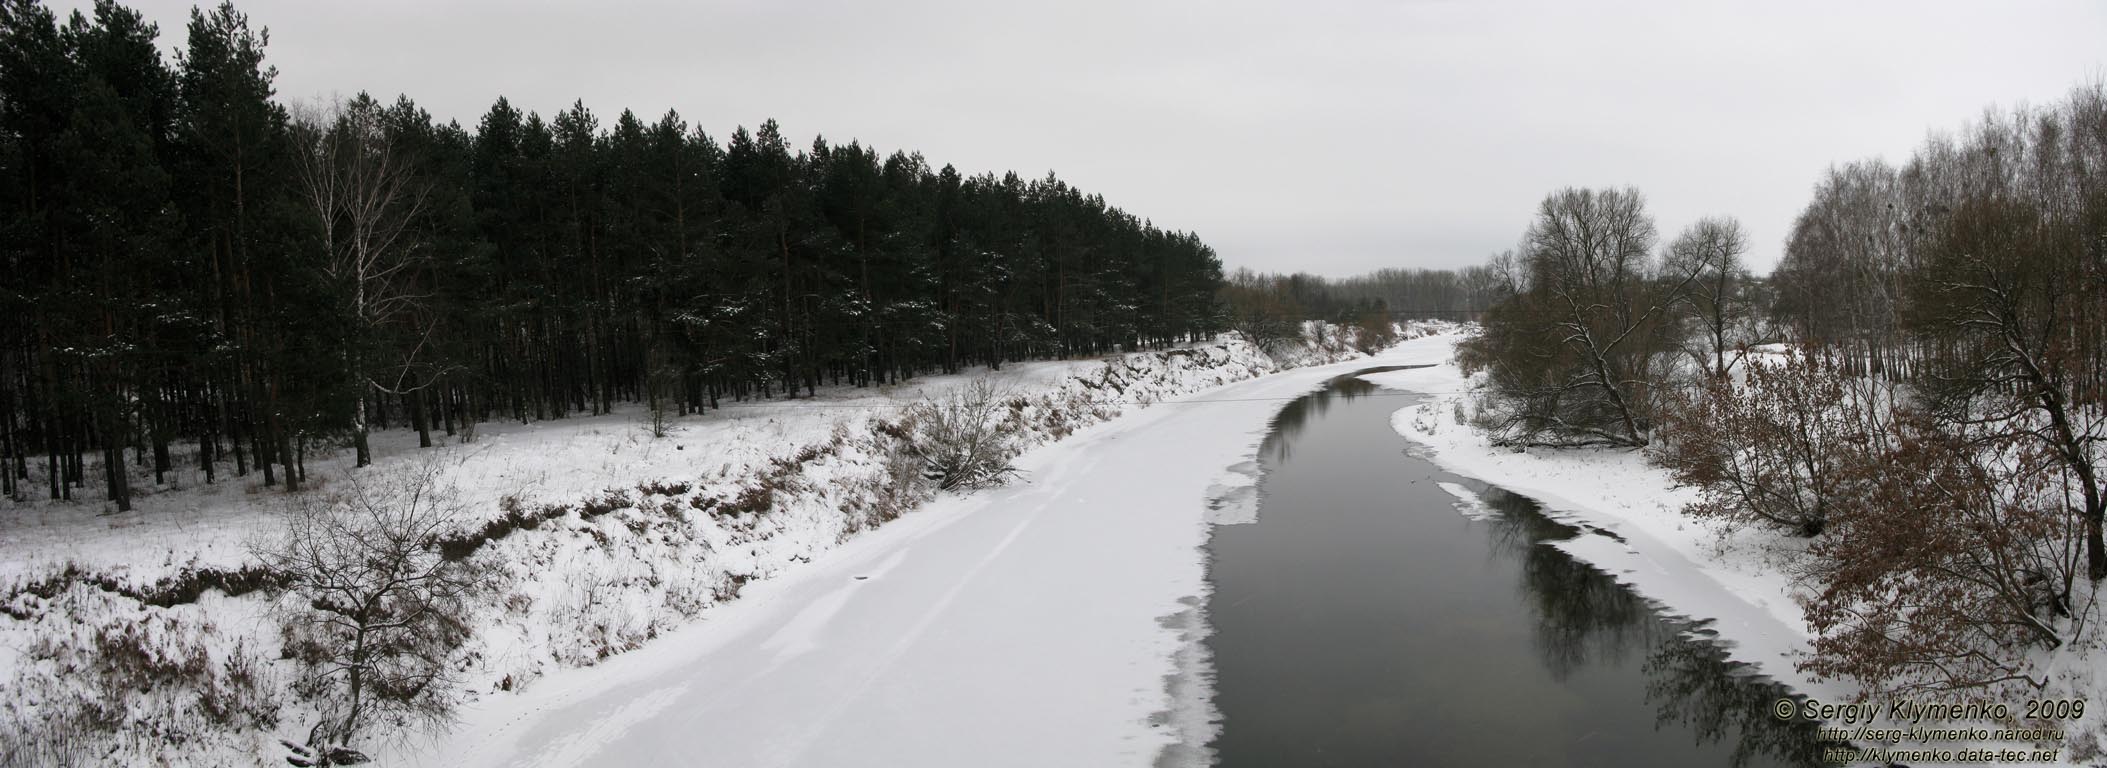 Житомирщина. Фото. Речка Тетерев зимой (в районе города Коростишев, 50°20'28"N, 29°04'40"E).